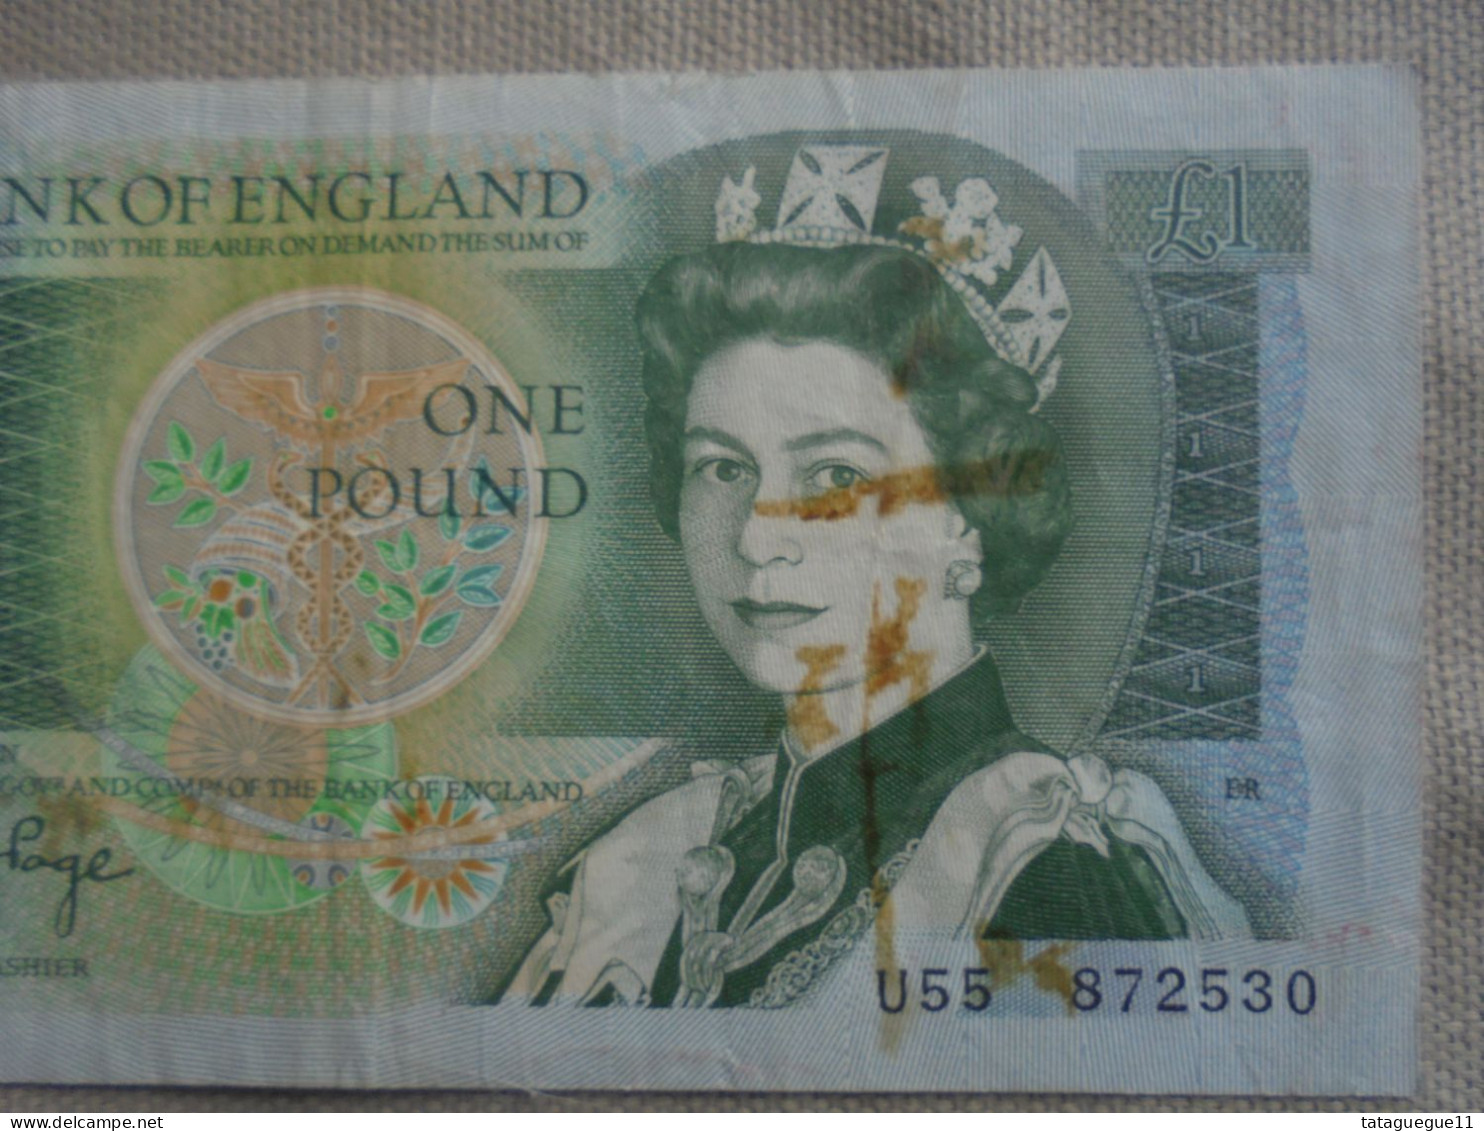 Ancien - Billet De Banque - One Pound Bank Of England - J.B Page - 1 Pond